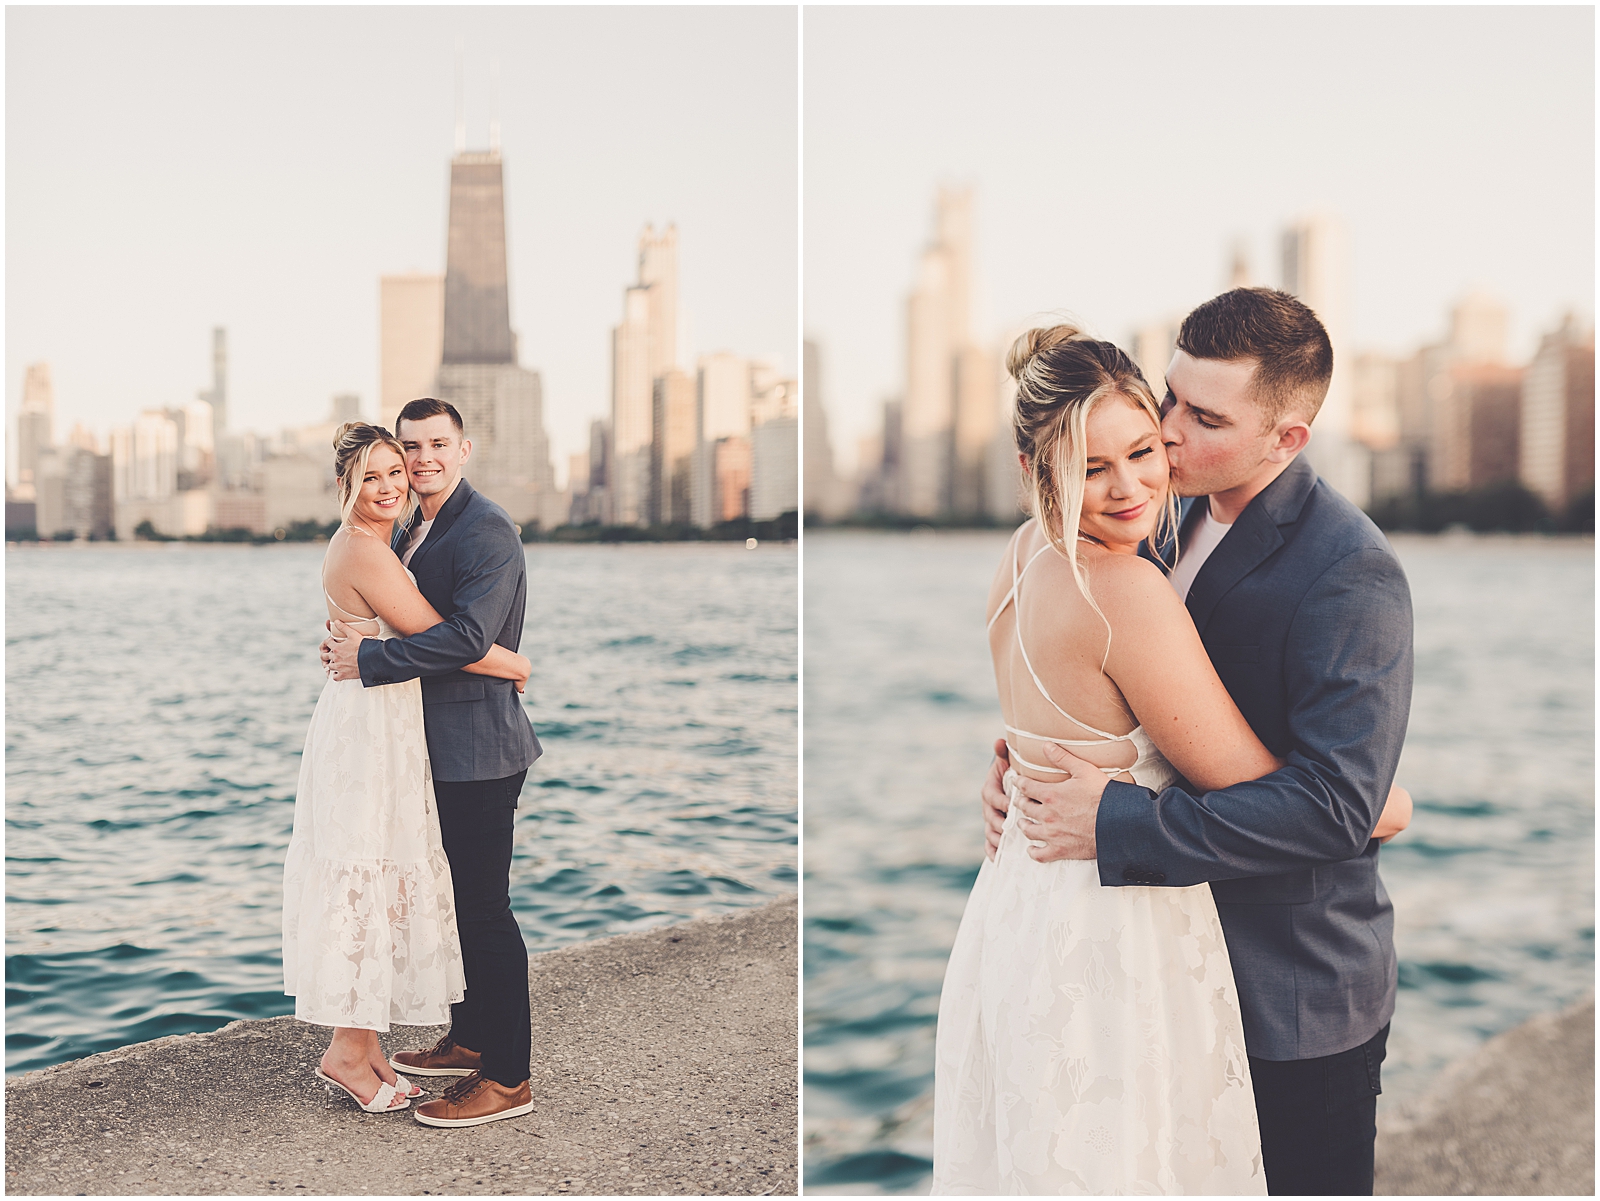 Sidney and Brendan's summer Kinzie Street Bridge & North Avenue Beach engagement photos in Chicago with Kara Evans Photographer.